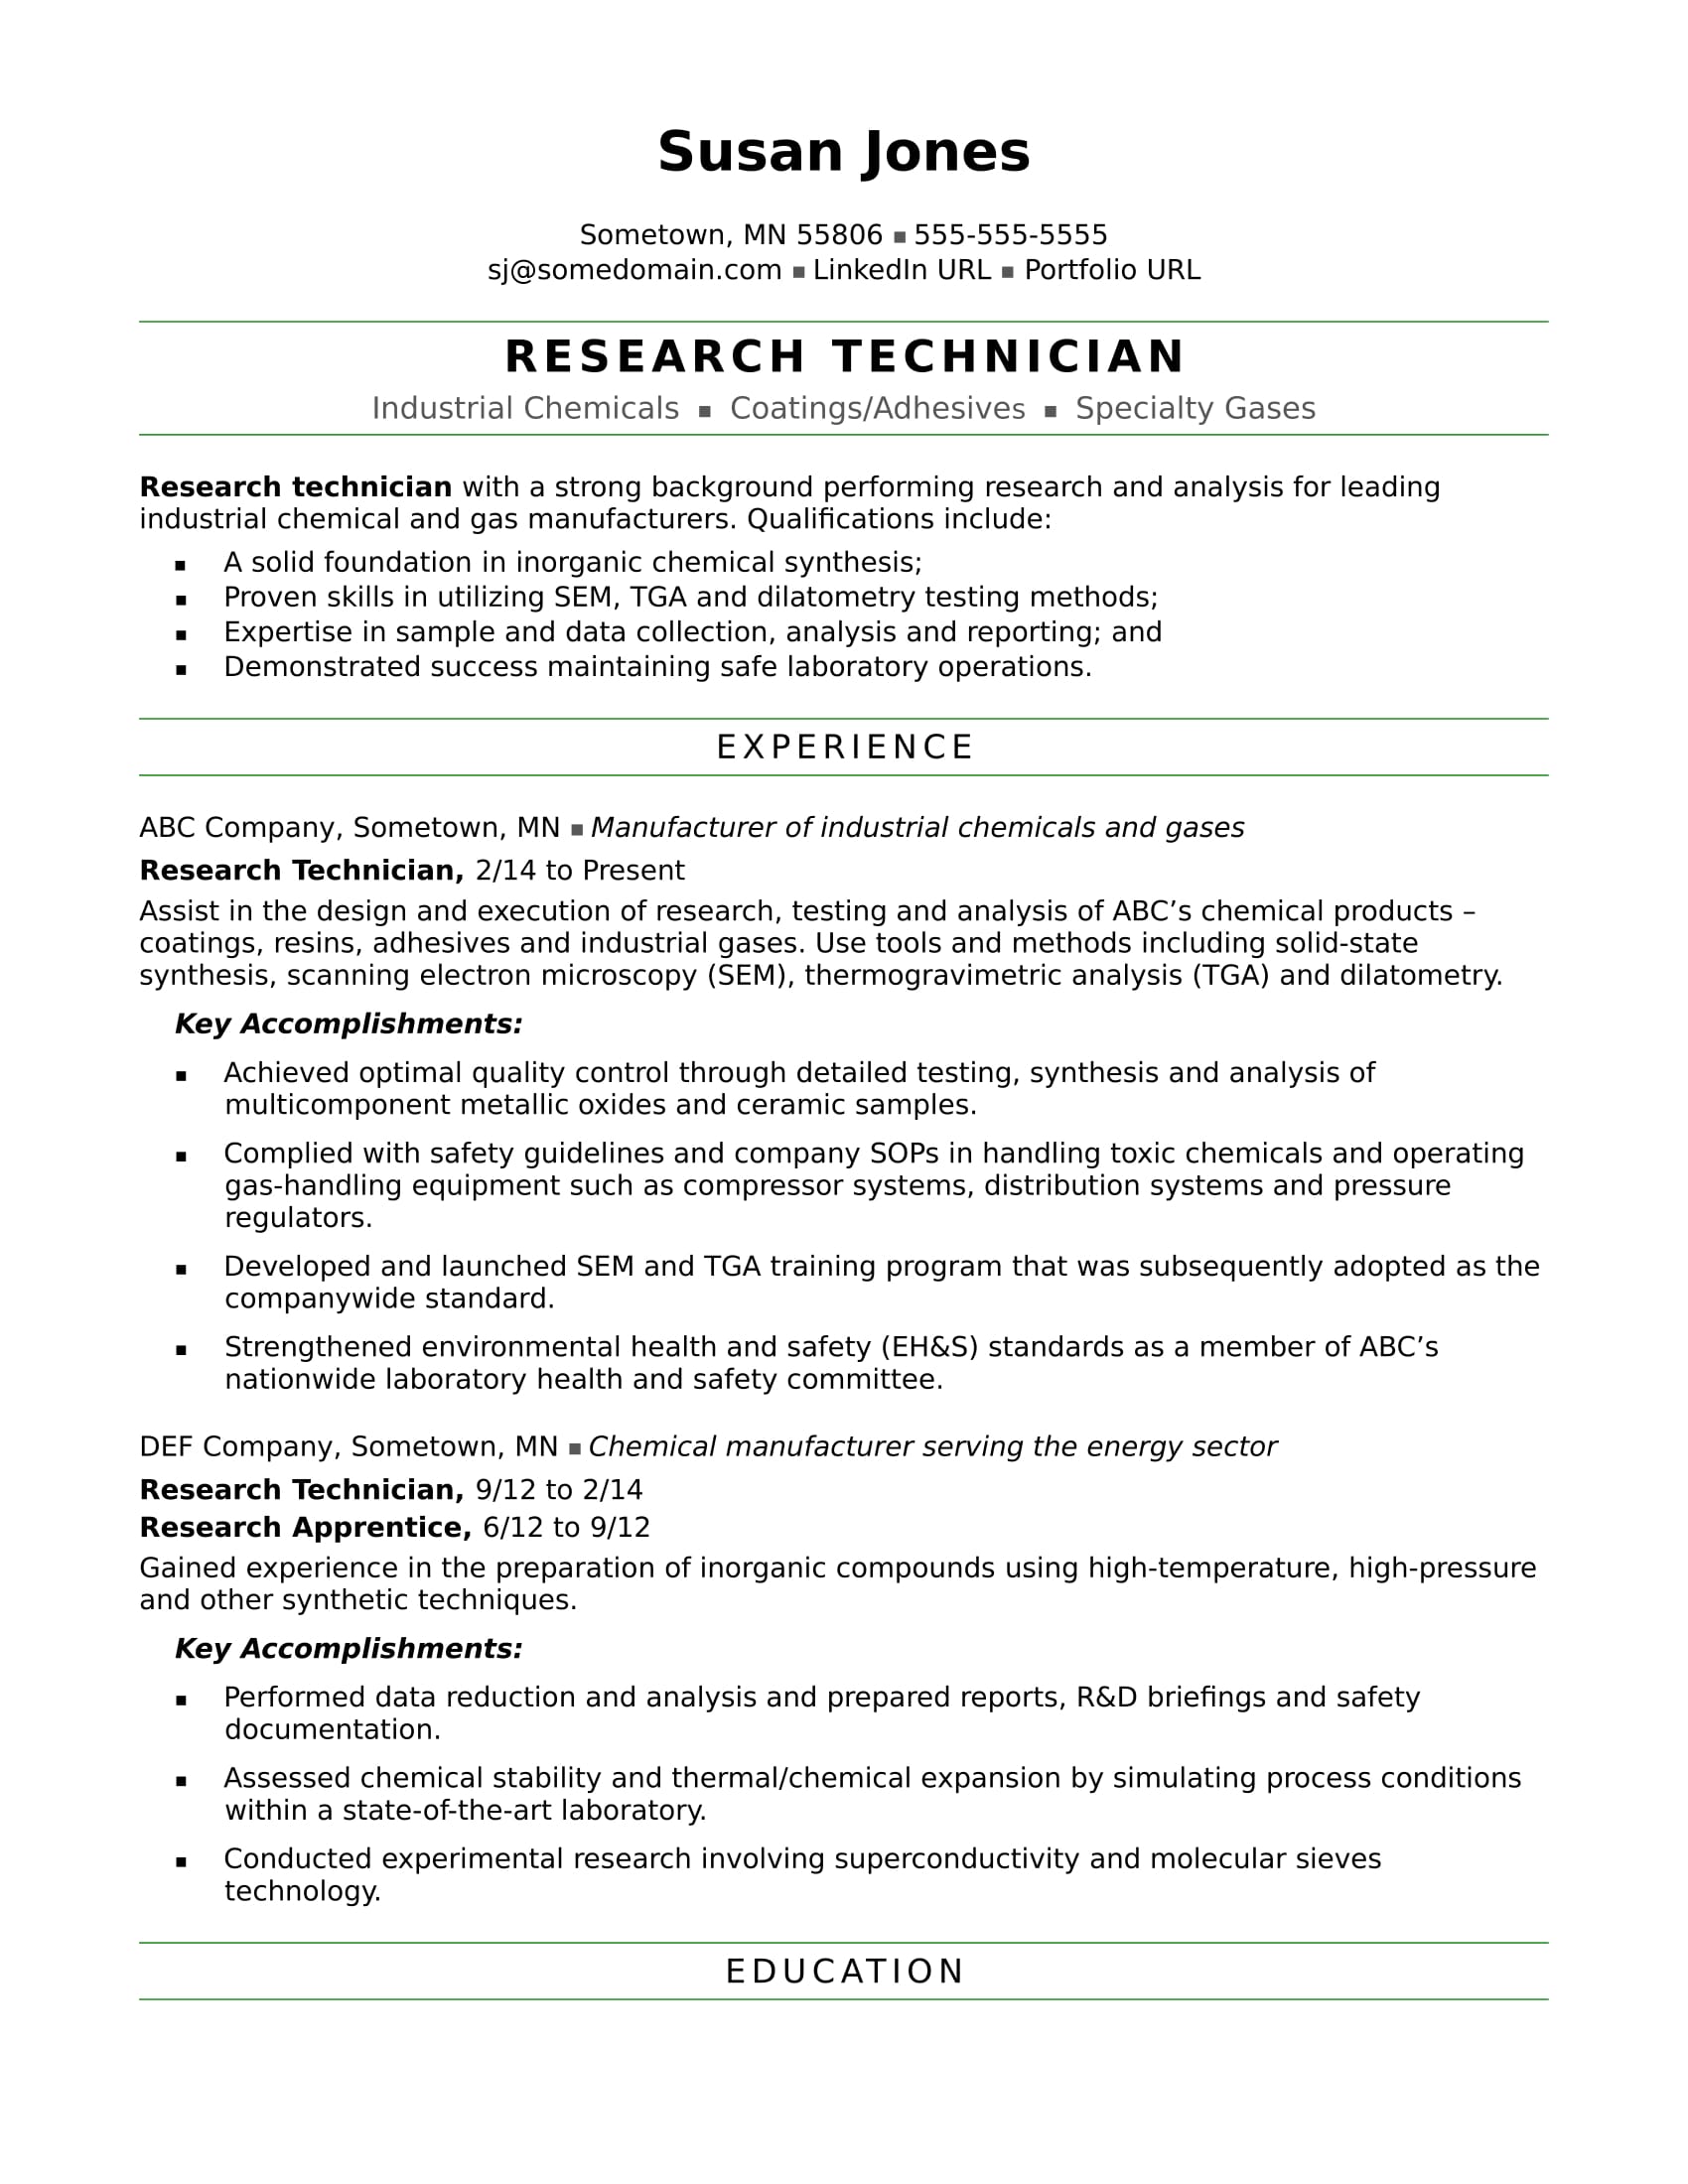 Research Technician Resume Sample